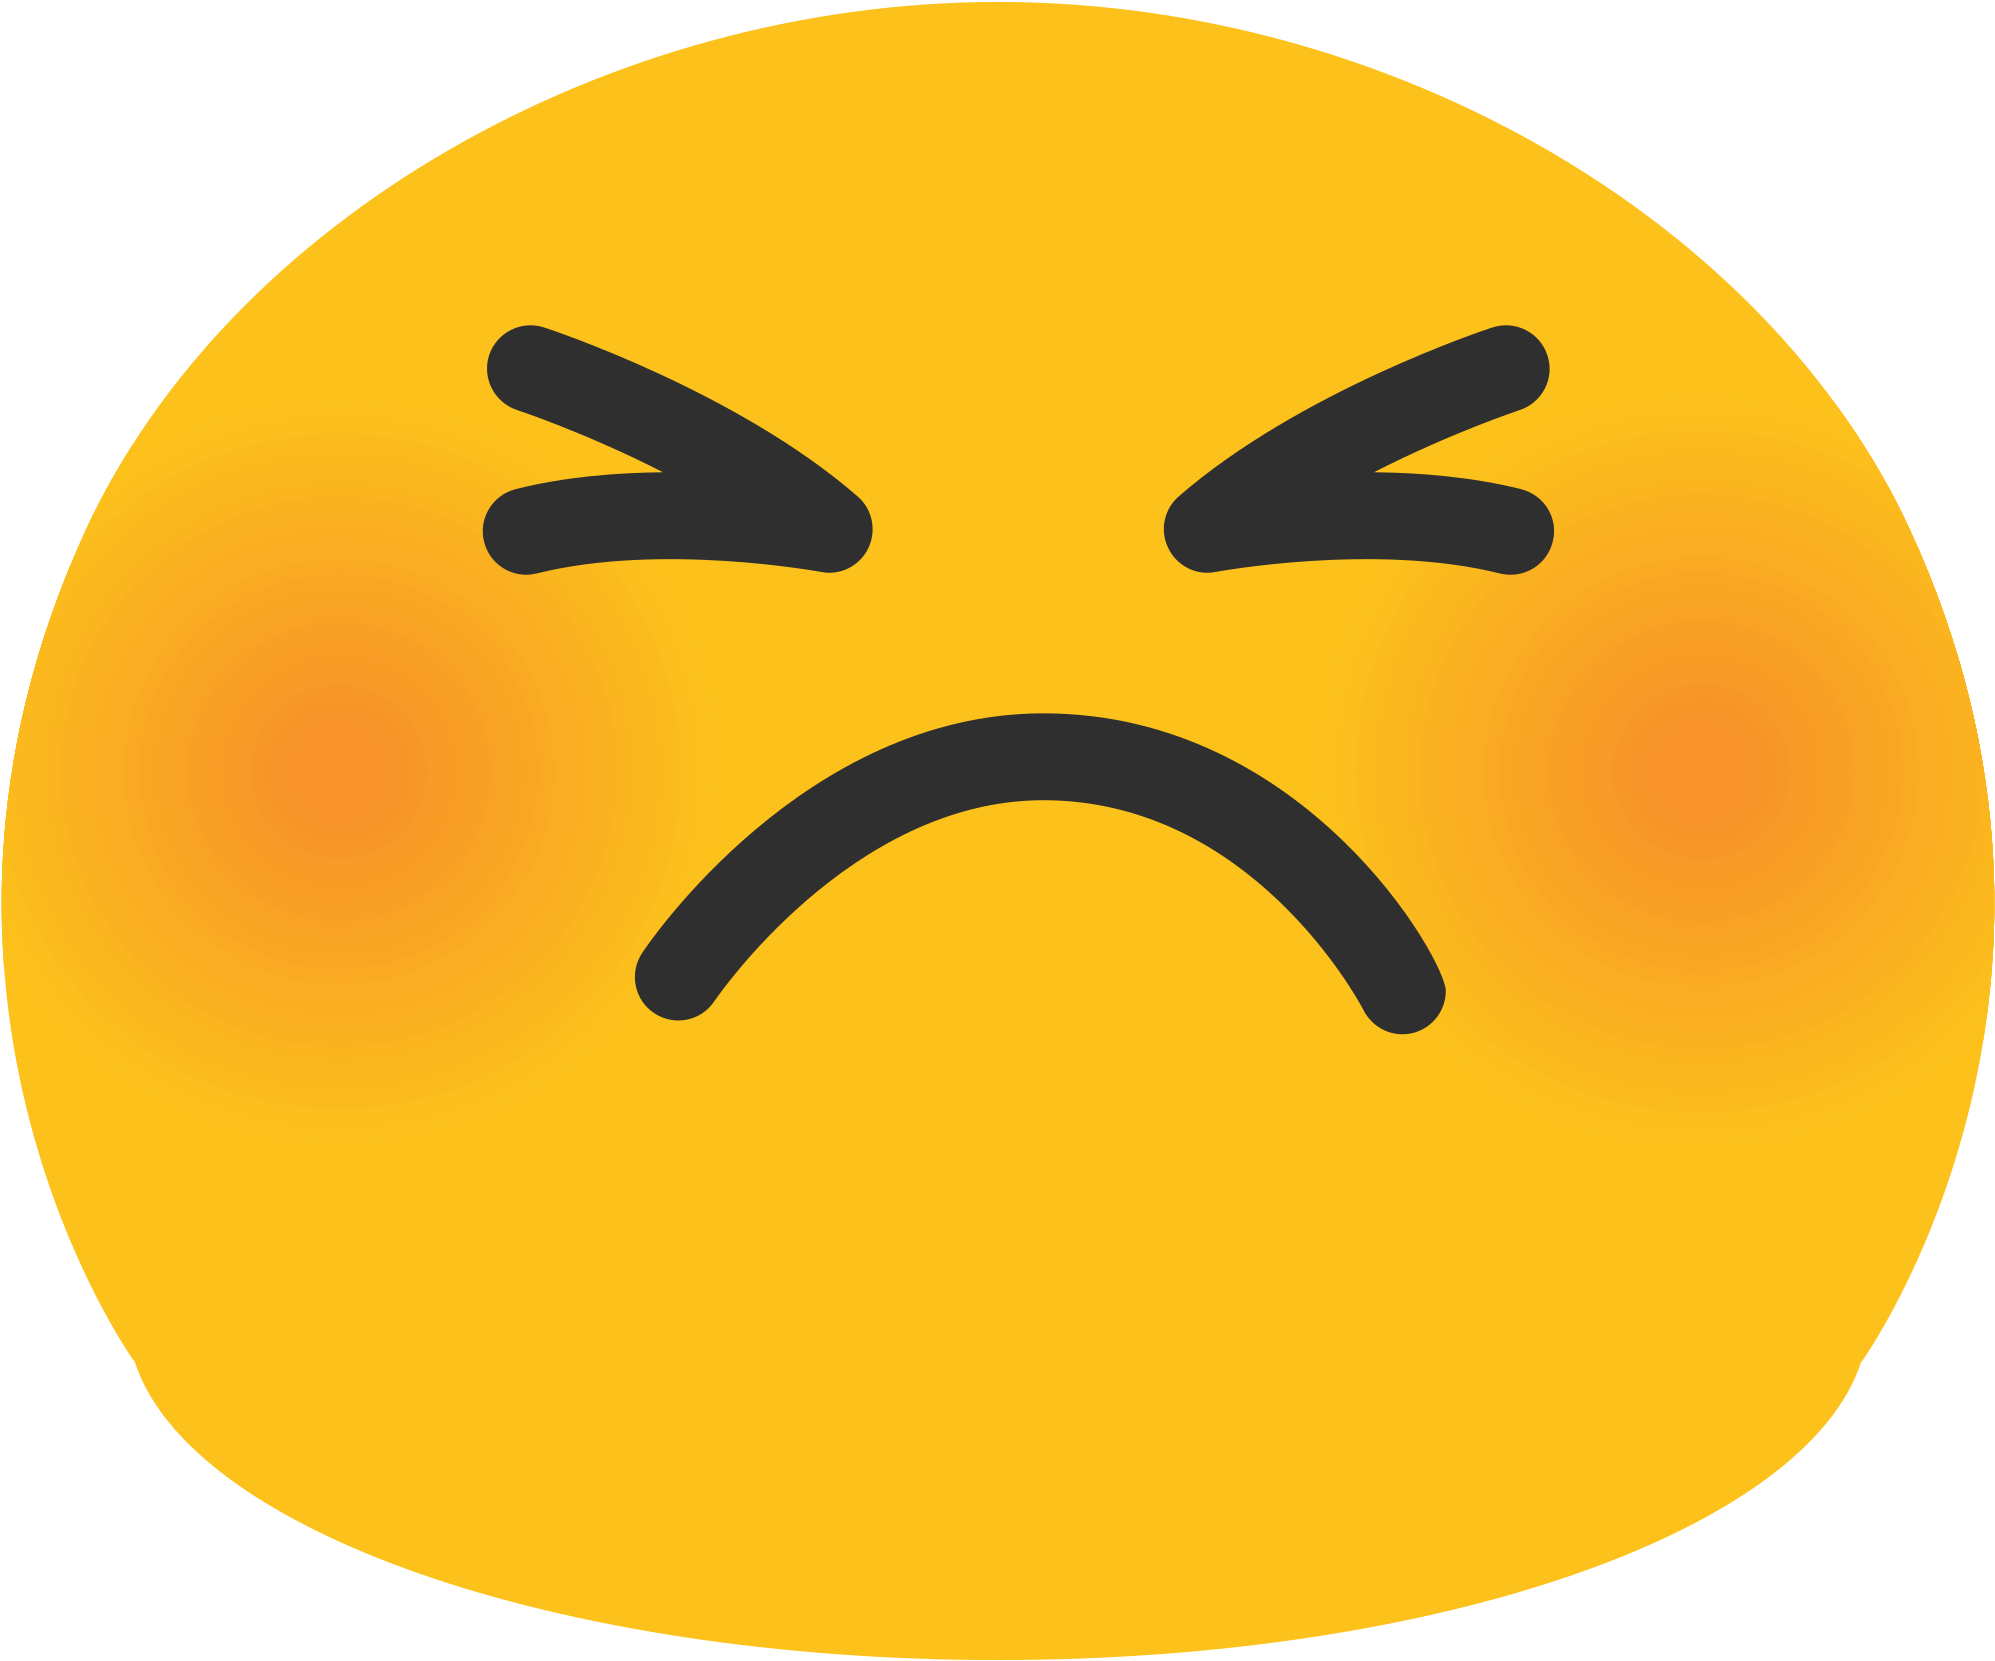 Boos gezicht emoji PNG Transparant Beeld